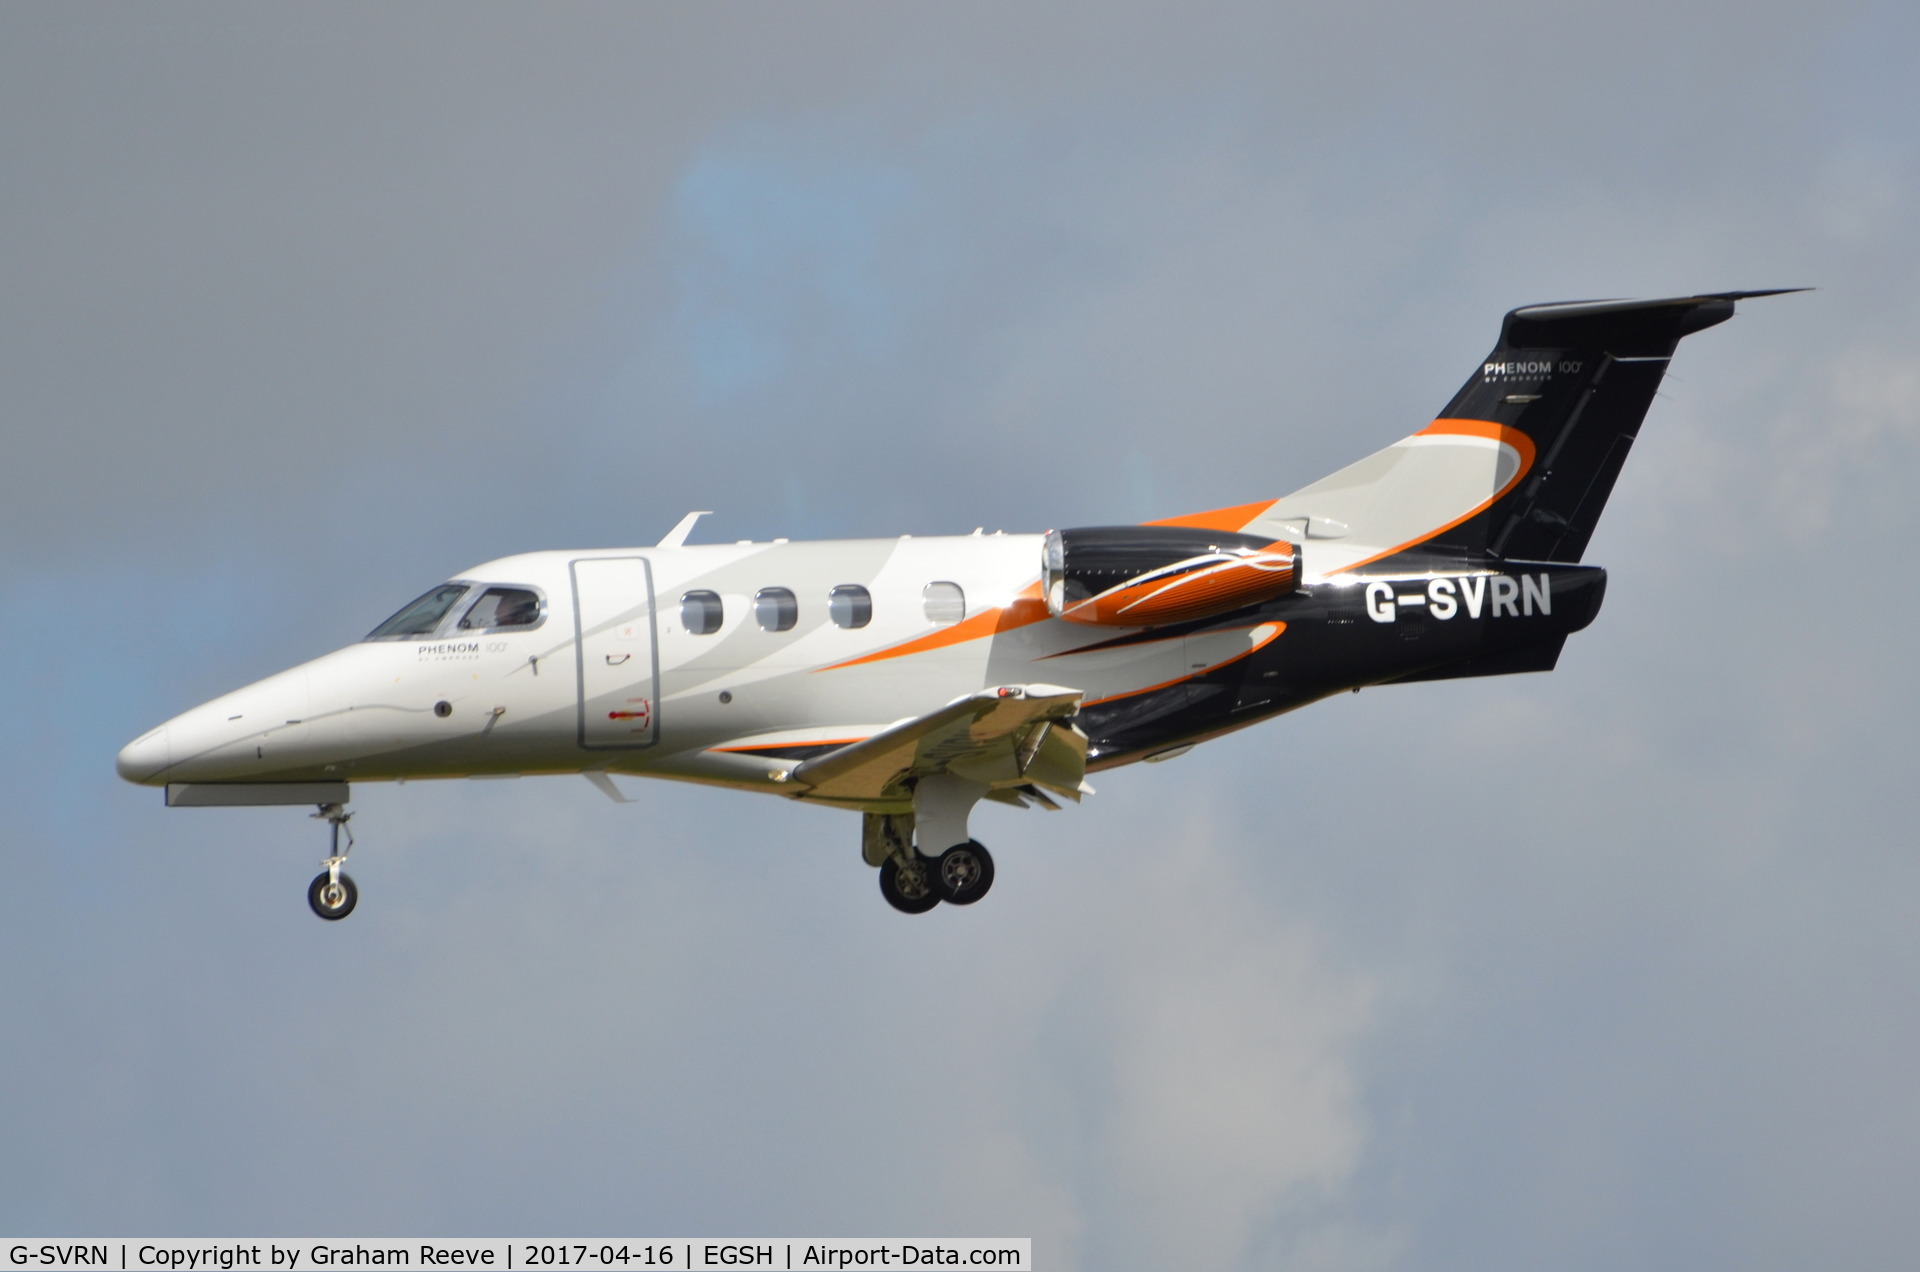 G-SVRN, 2009 Embraer EMB-500 Phenom 100 C/N 50000112, Landing at Norwich.